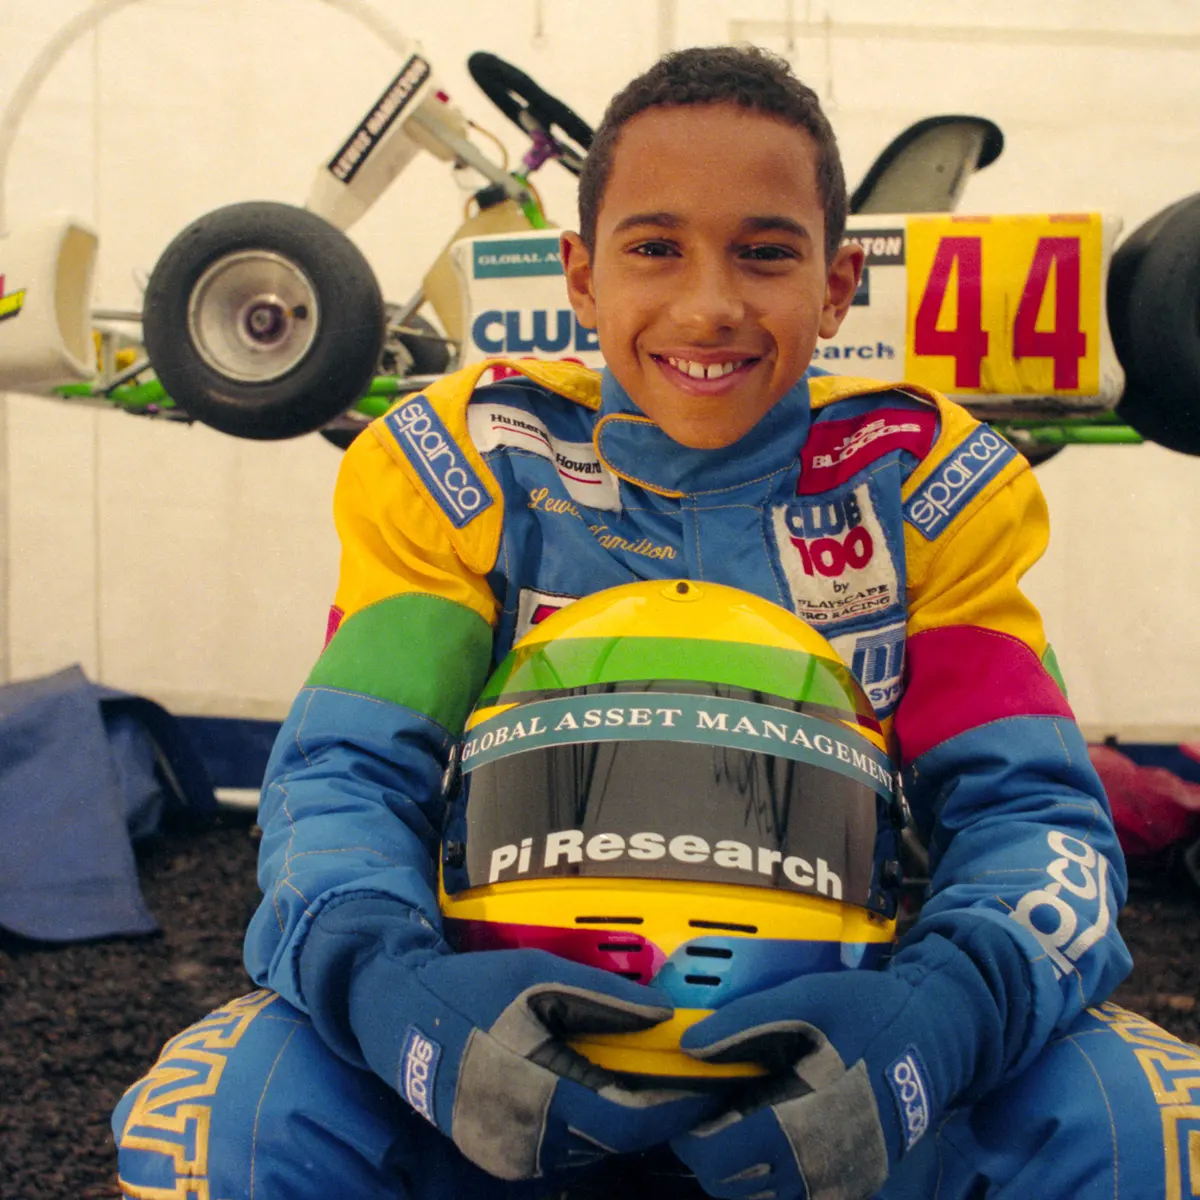 Young Lewis Hamilton